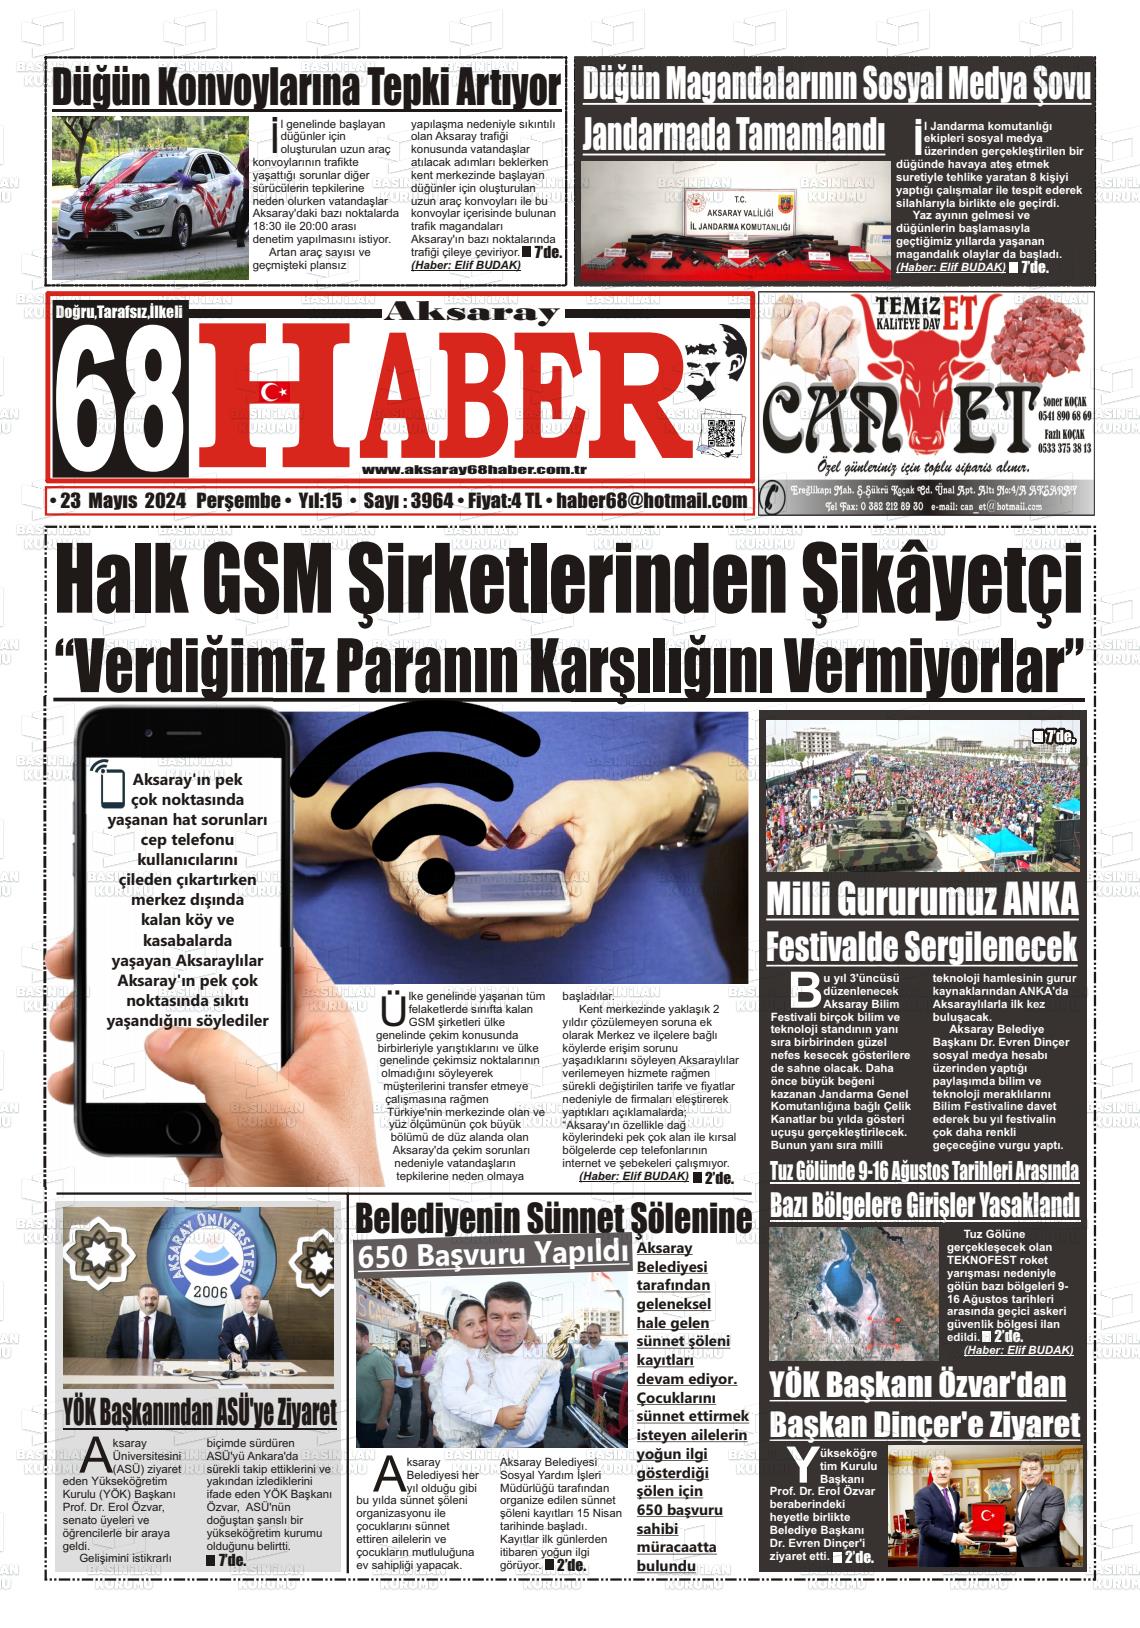 AKSARAY 68 HABER Gazetesi